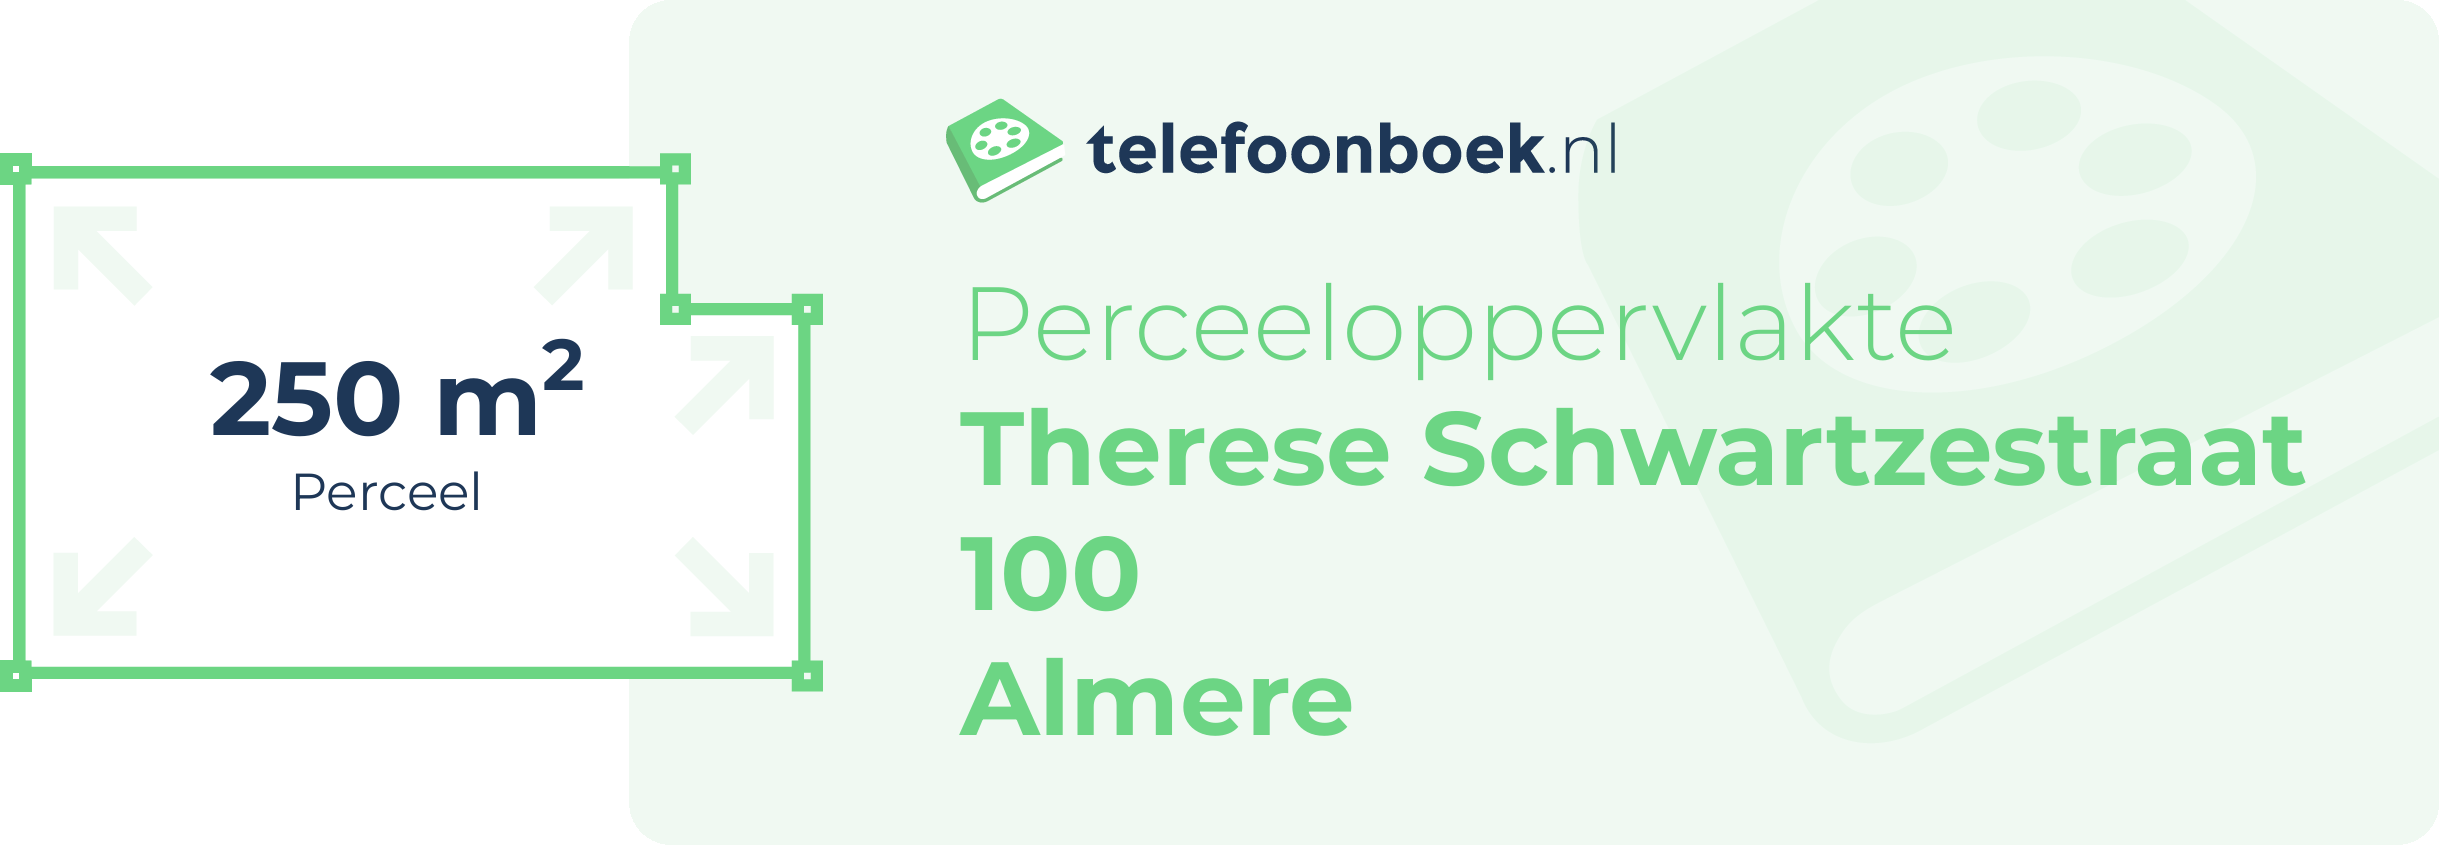 Perceeloppervlakte Therese Schwartzestraat 100 Almere